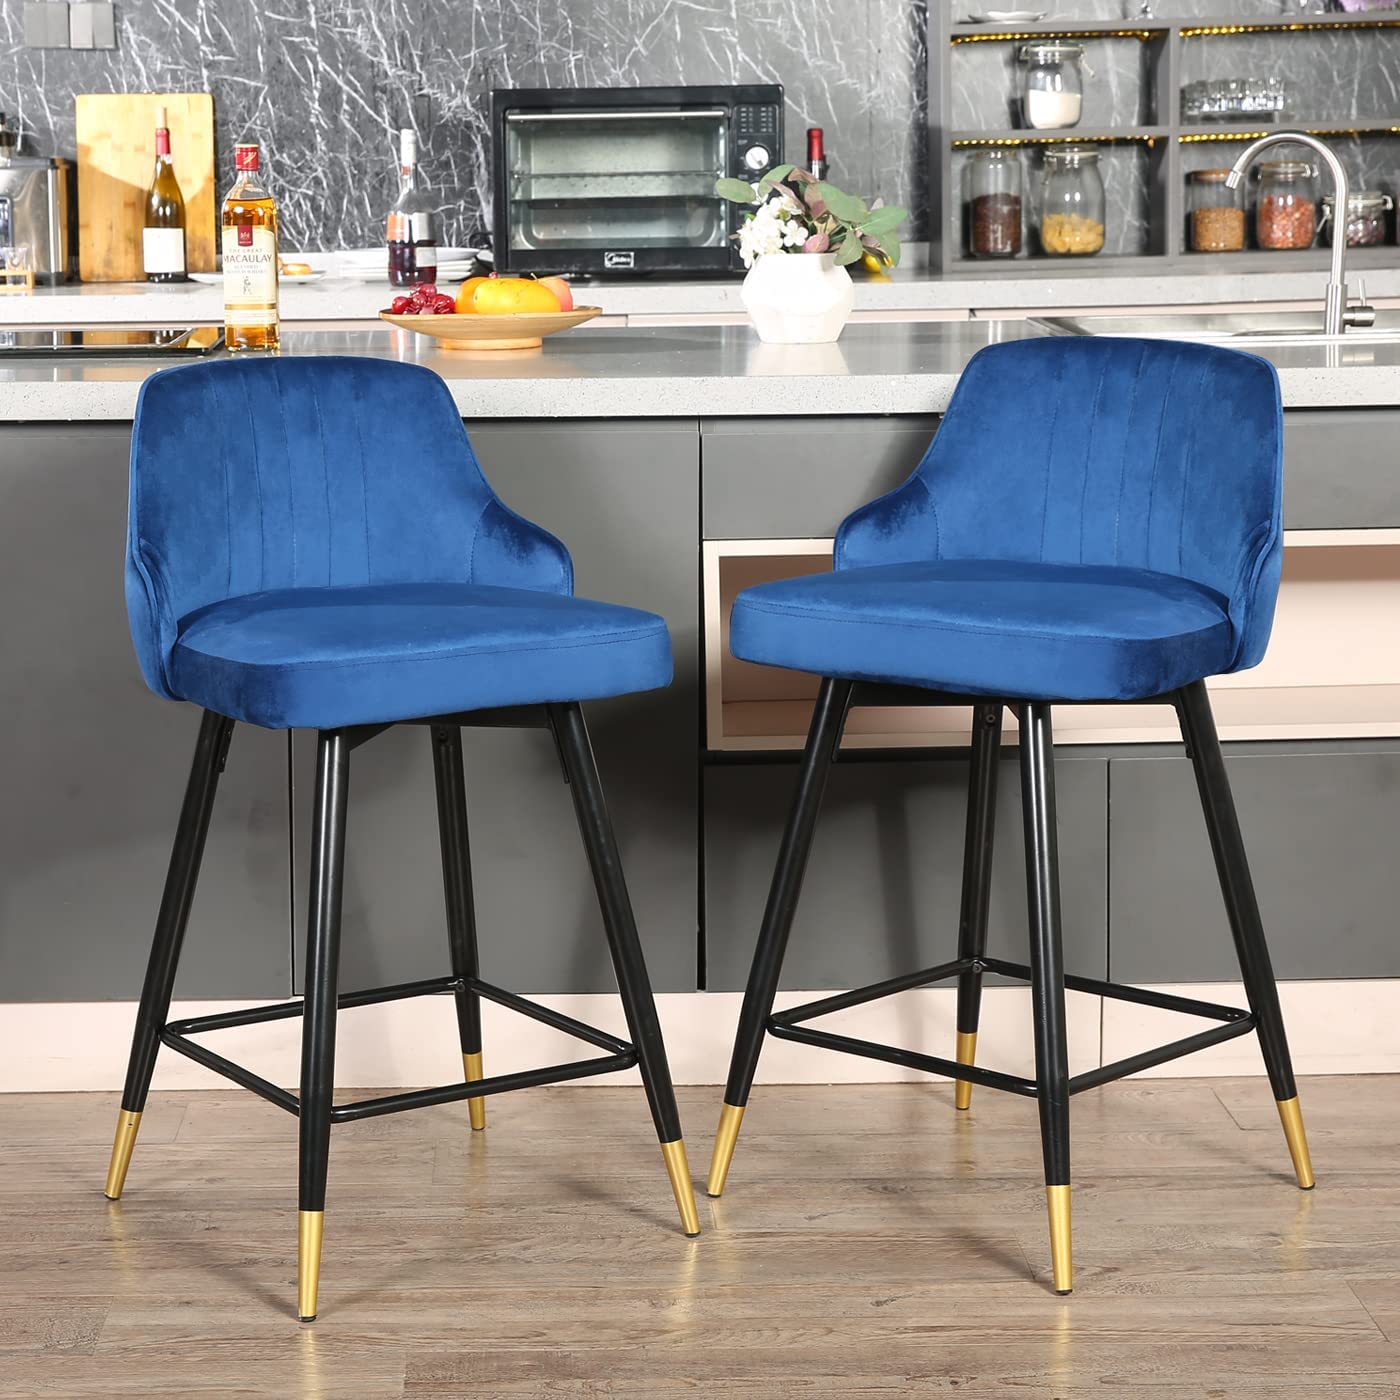 Stools Bar chairs, counter stools, bar stool, stool chairs – Sicotas